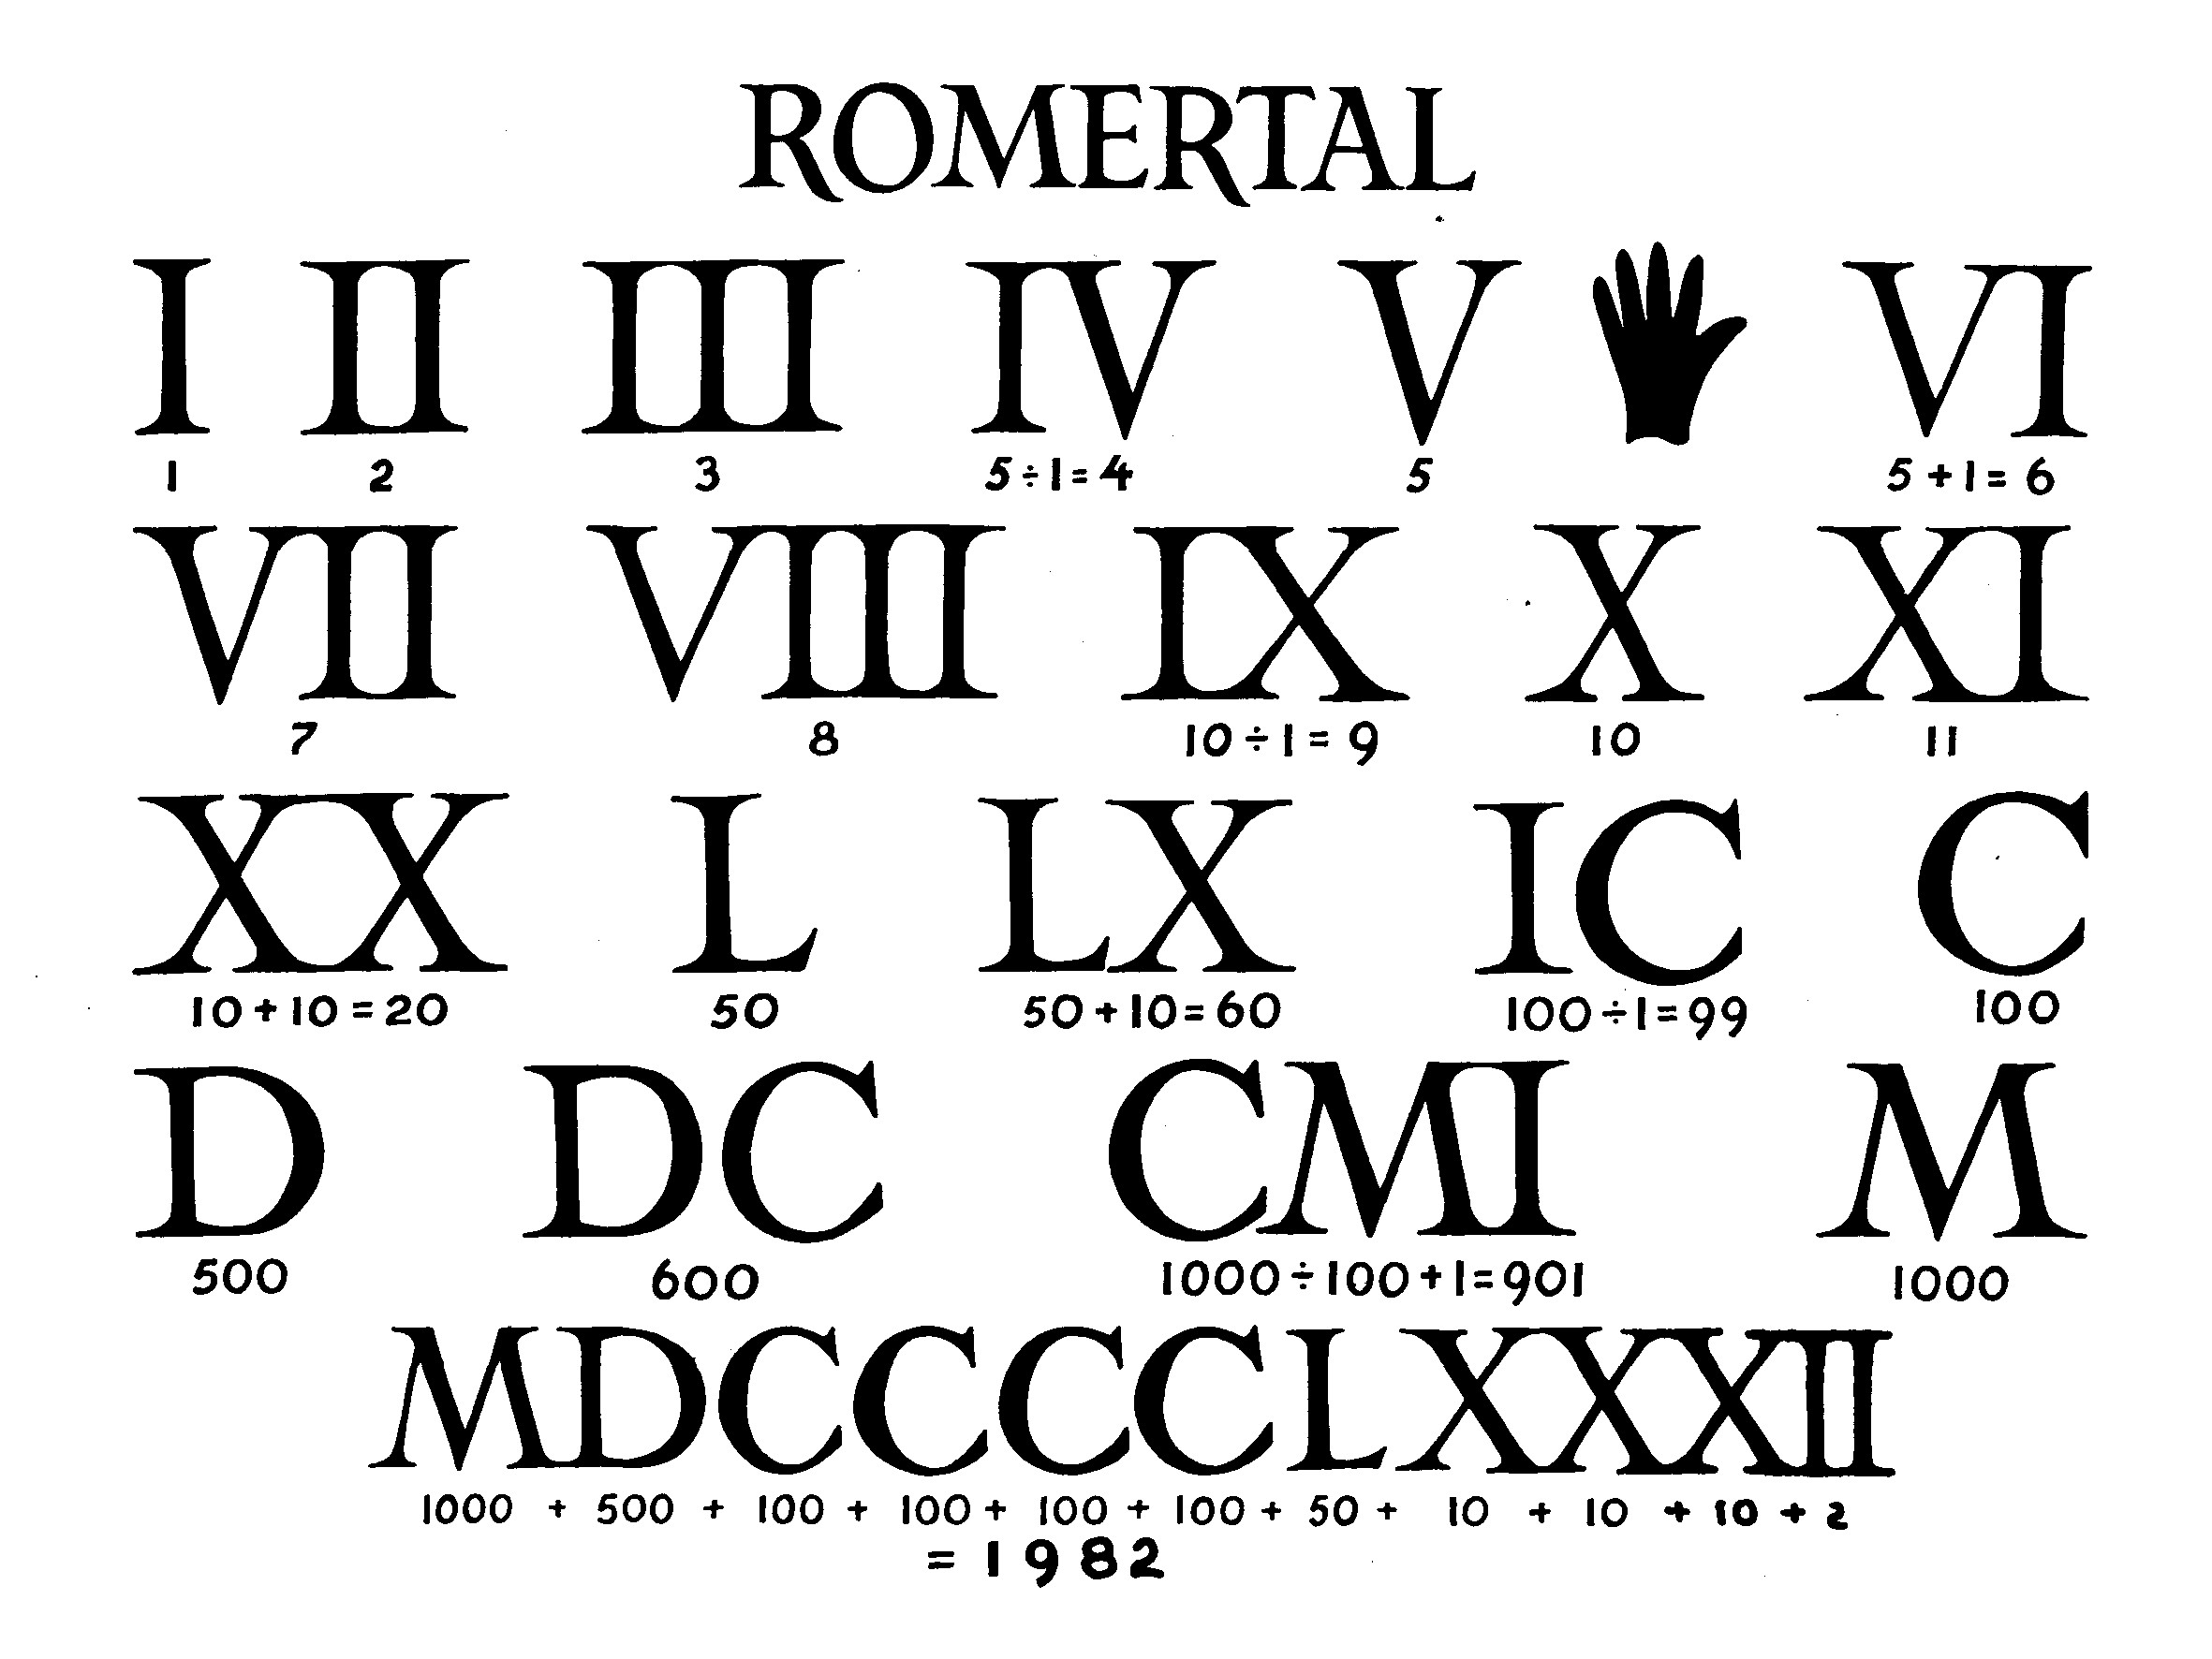 Romertal